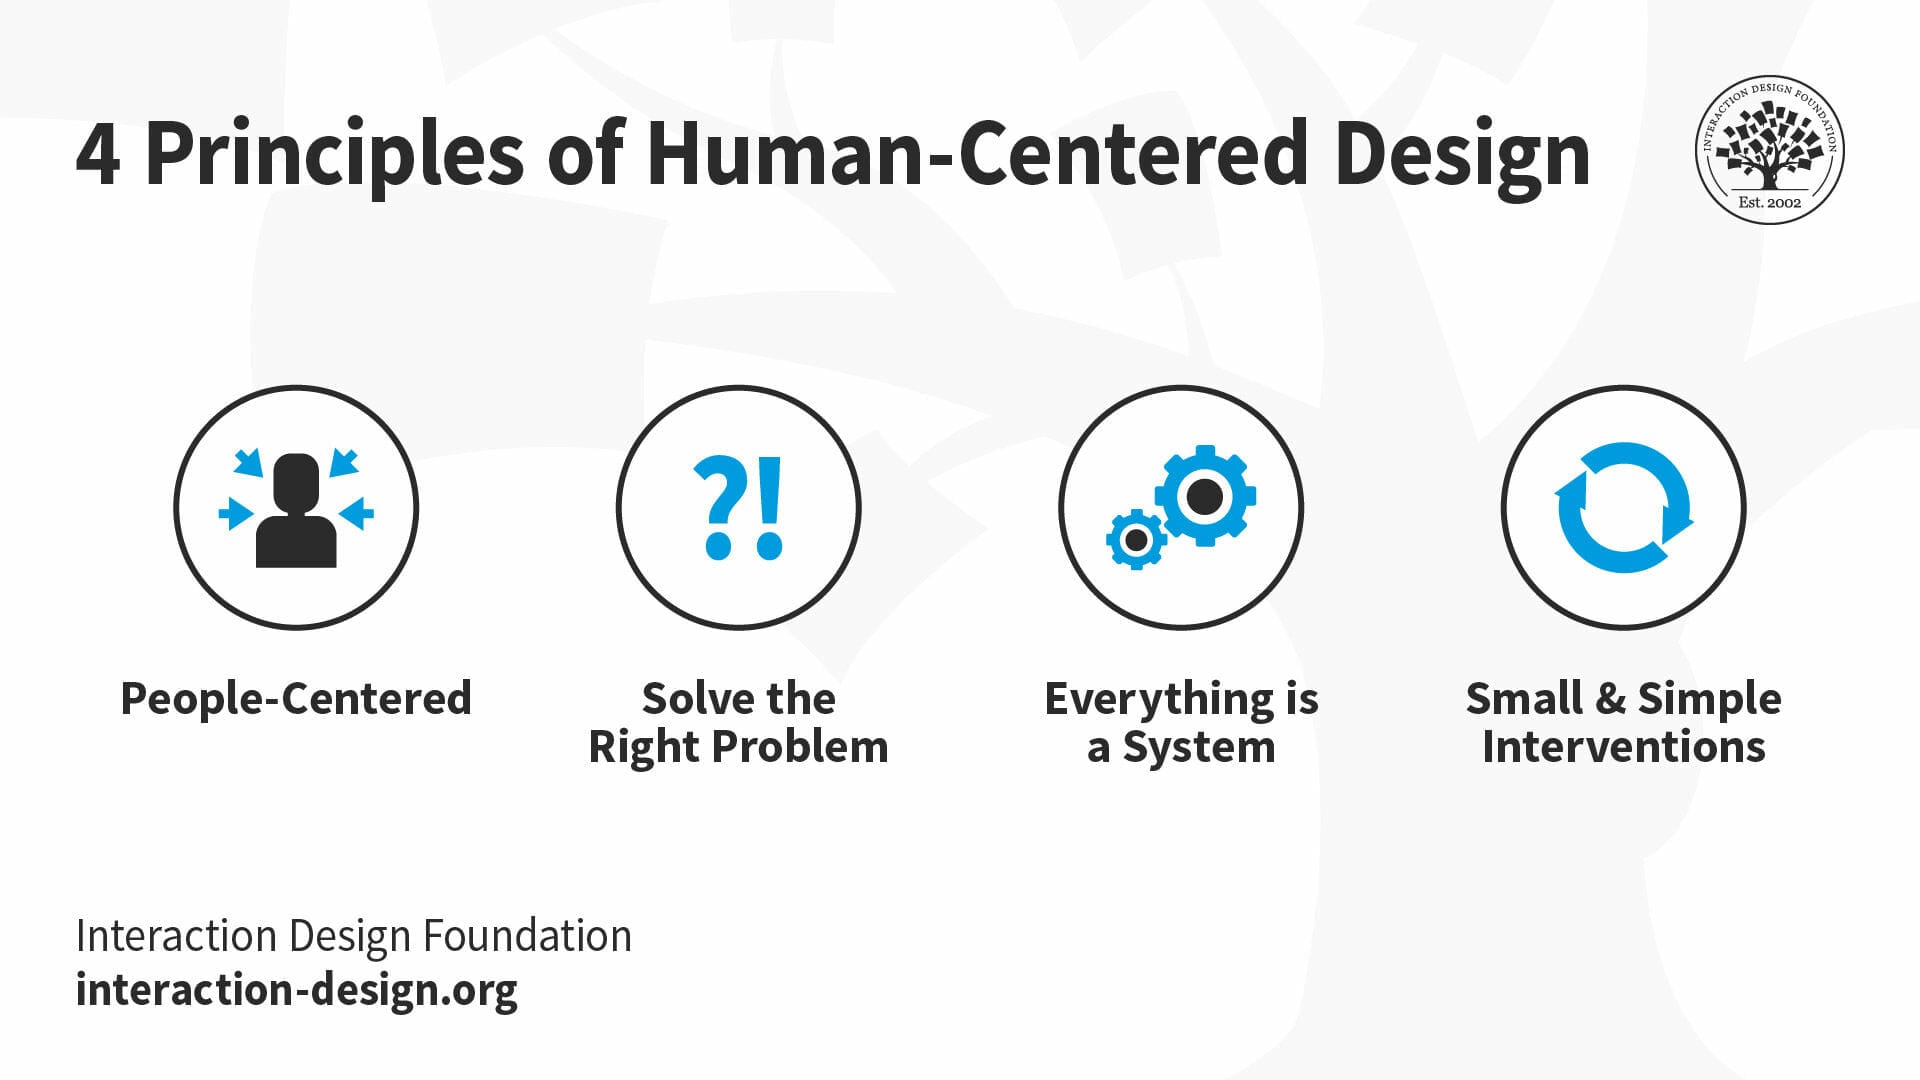 4 principles of human-centered design